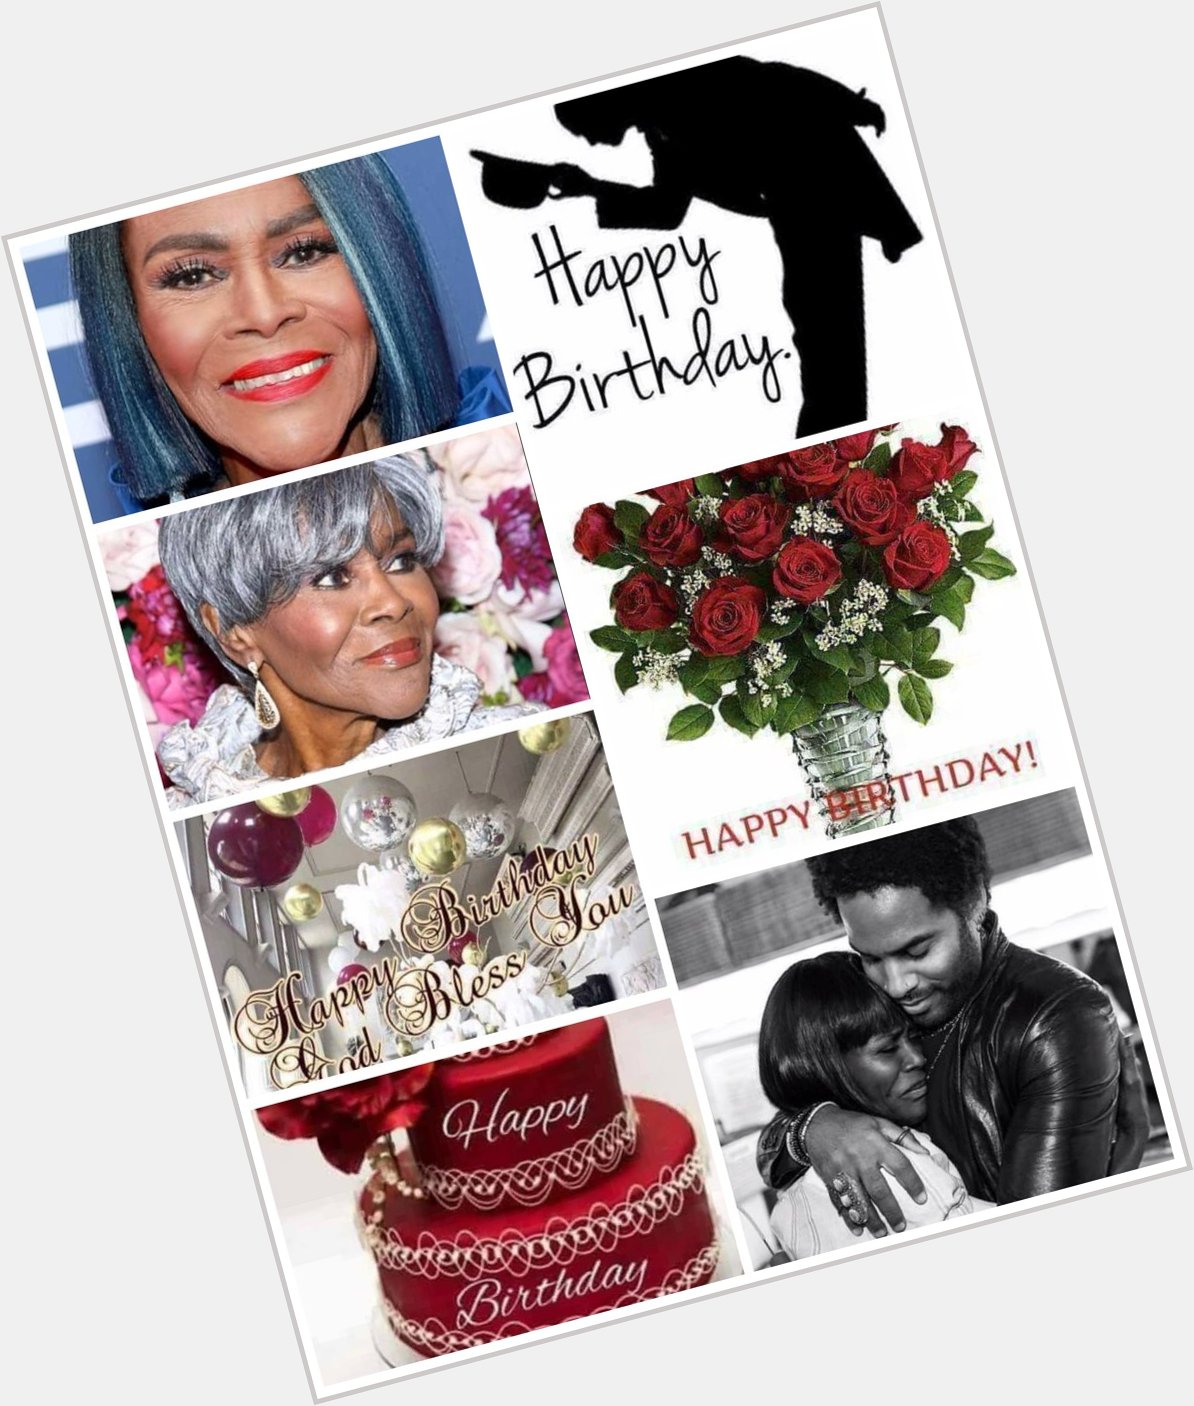 Wishing the legendary Cicely Tyson a wonderful Happy Birthday! Enjoy your special day. 